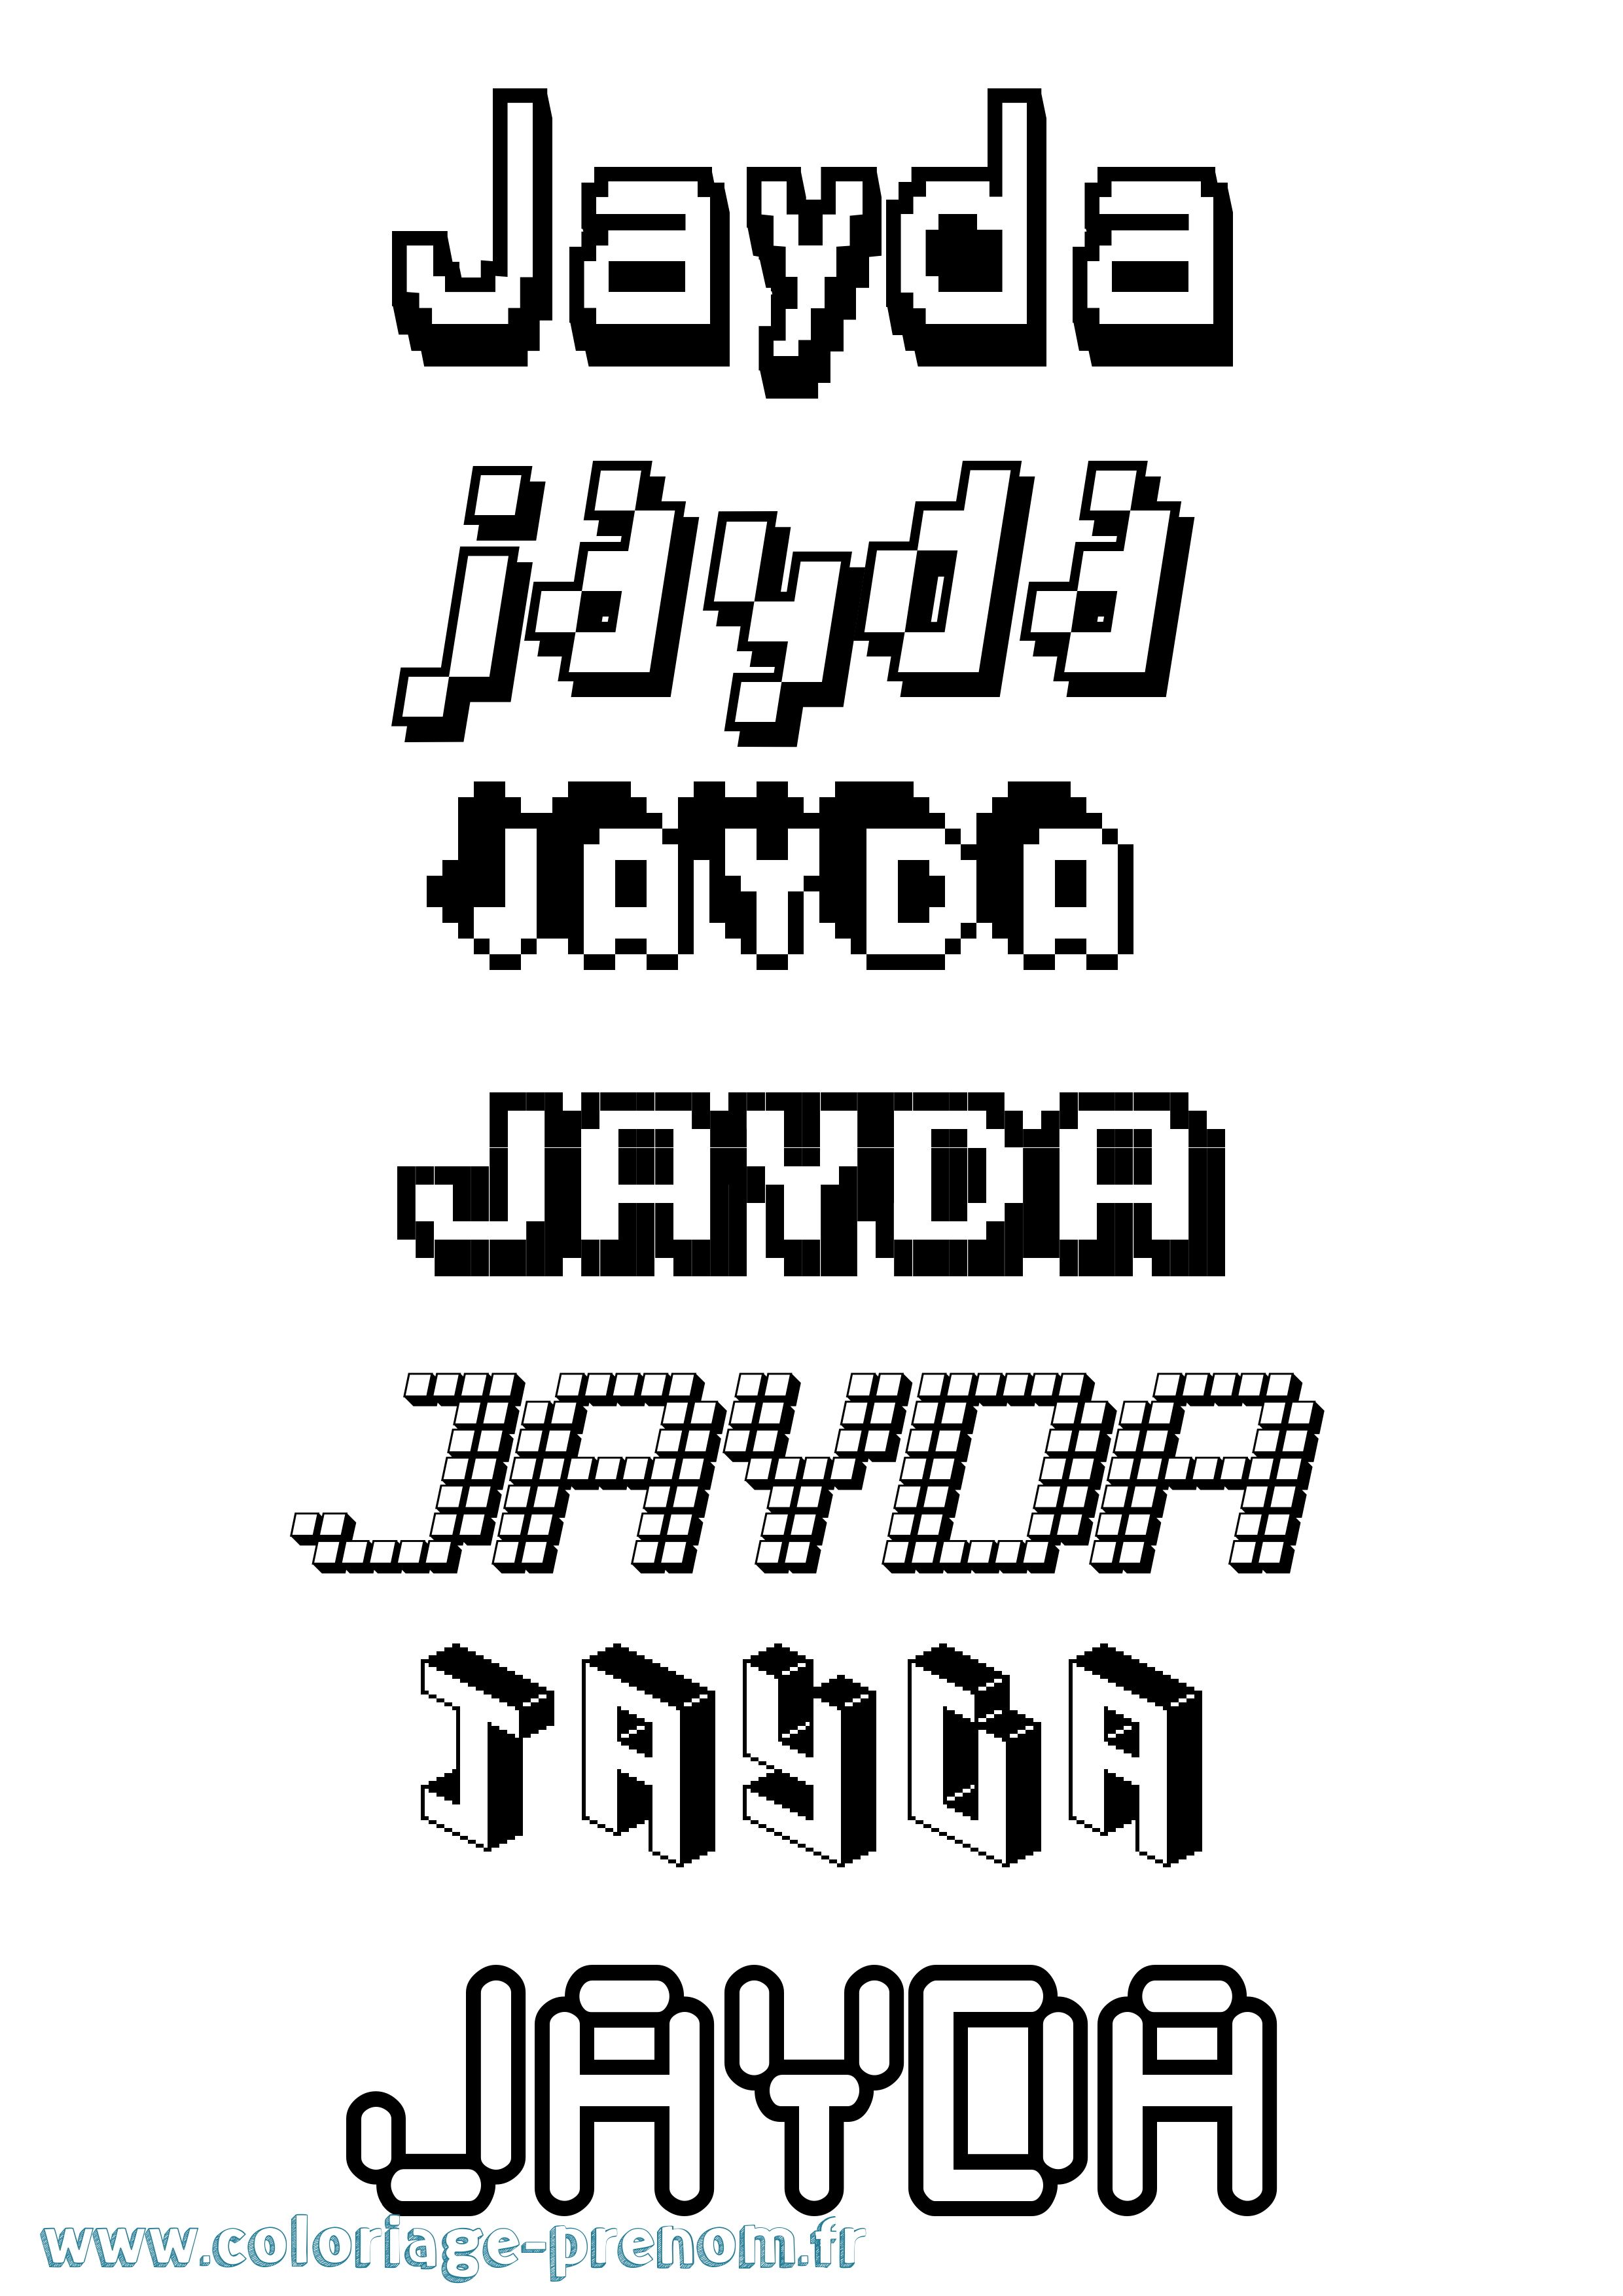 Coloriage prénom Jayda Pixel